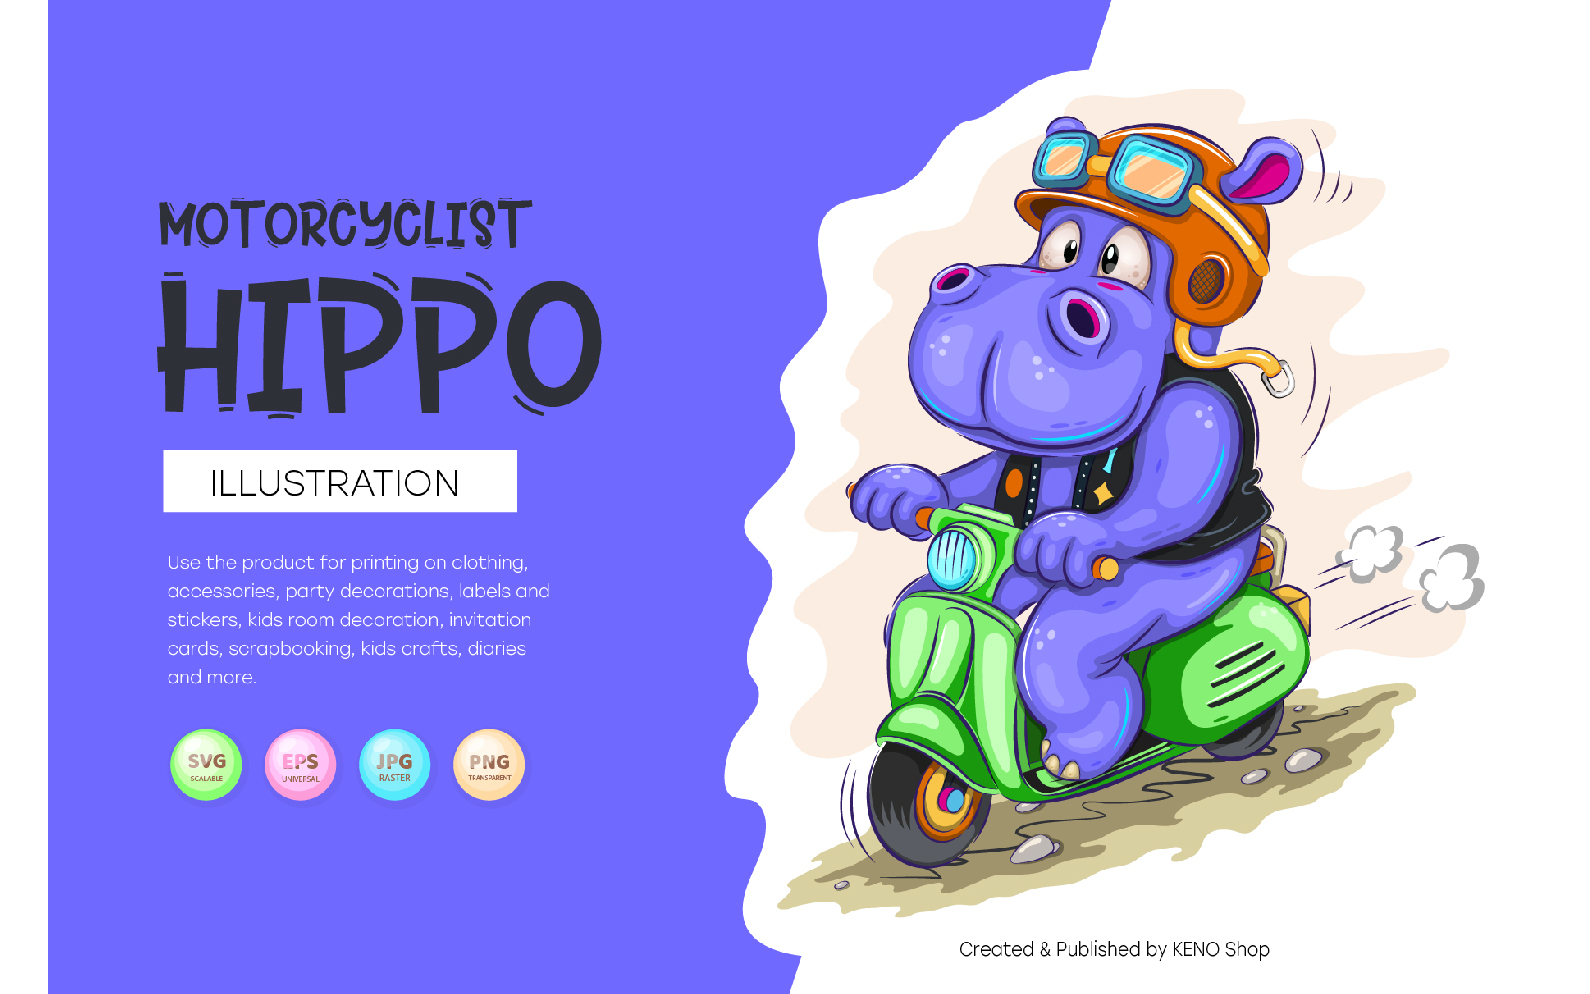 Cartoon hippo motorcyclist.